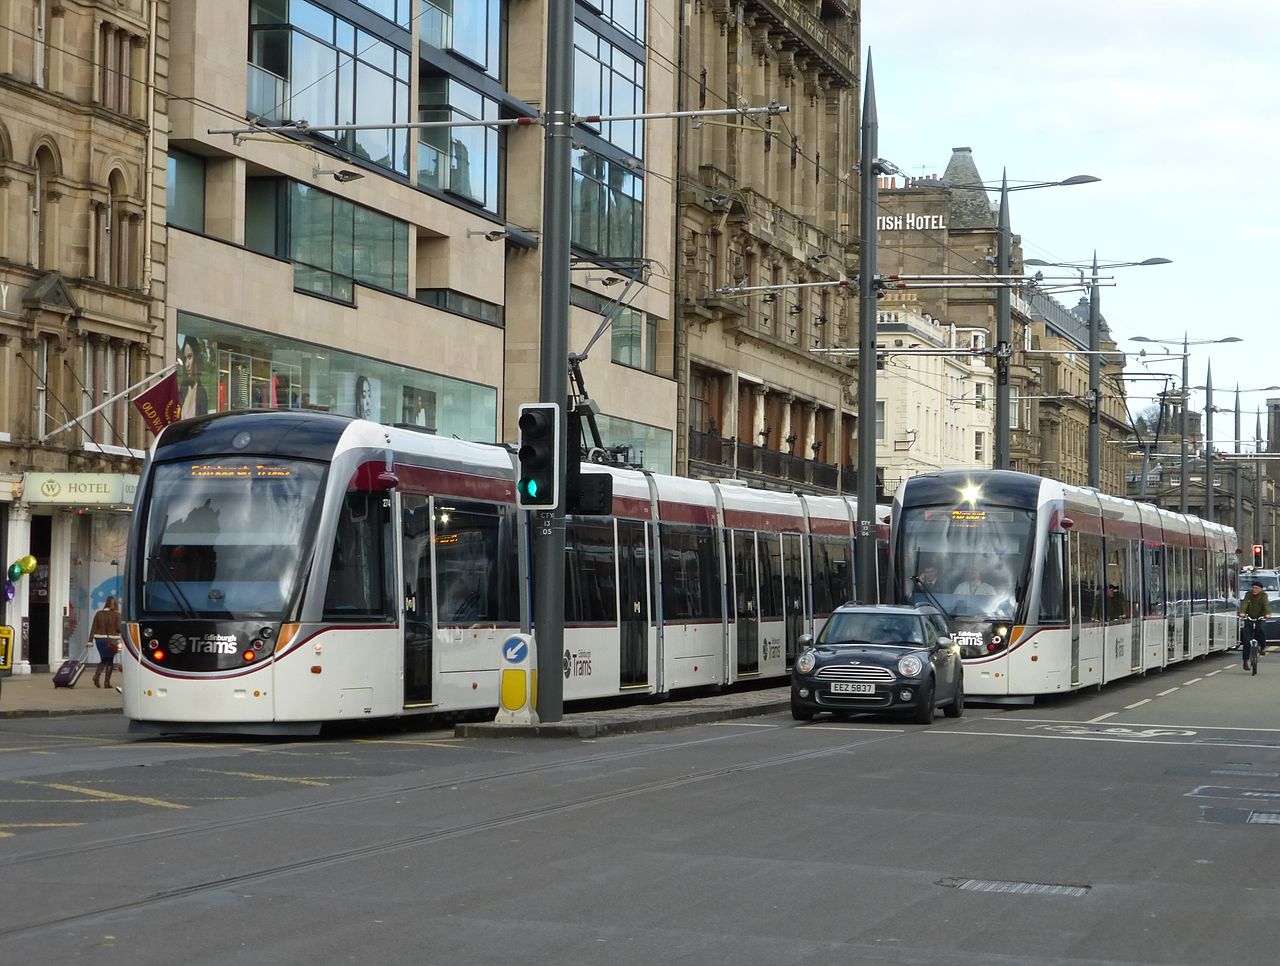 Edinburgh tram photo